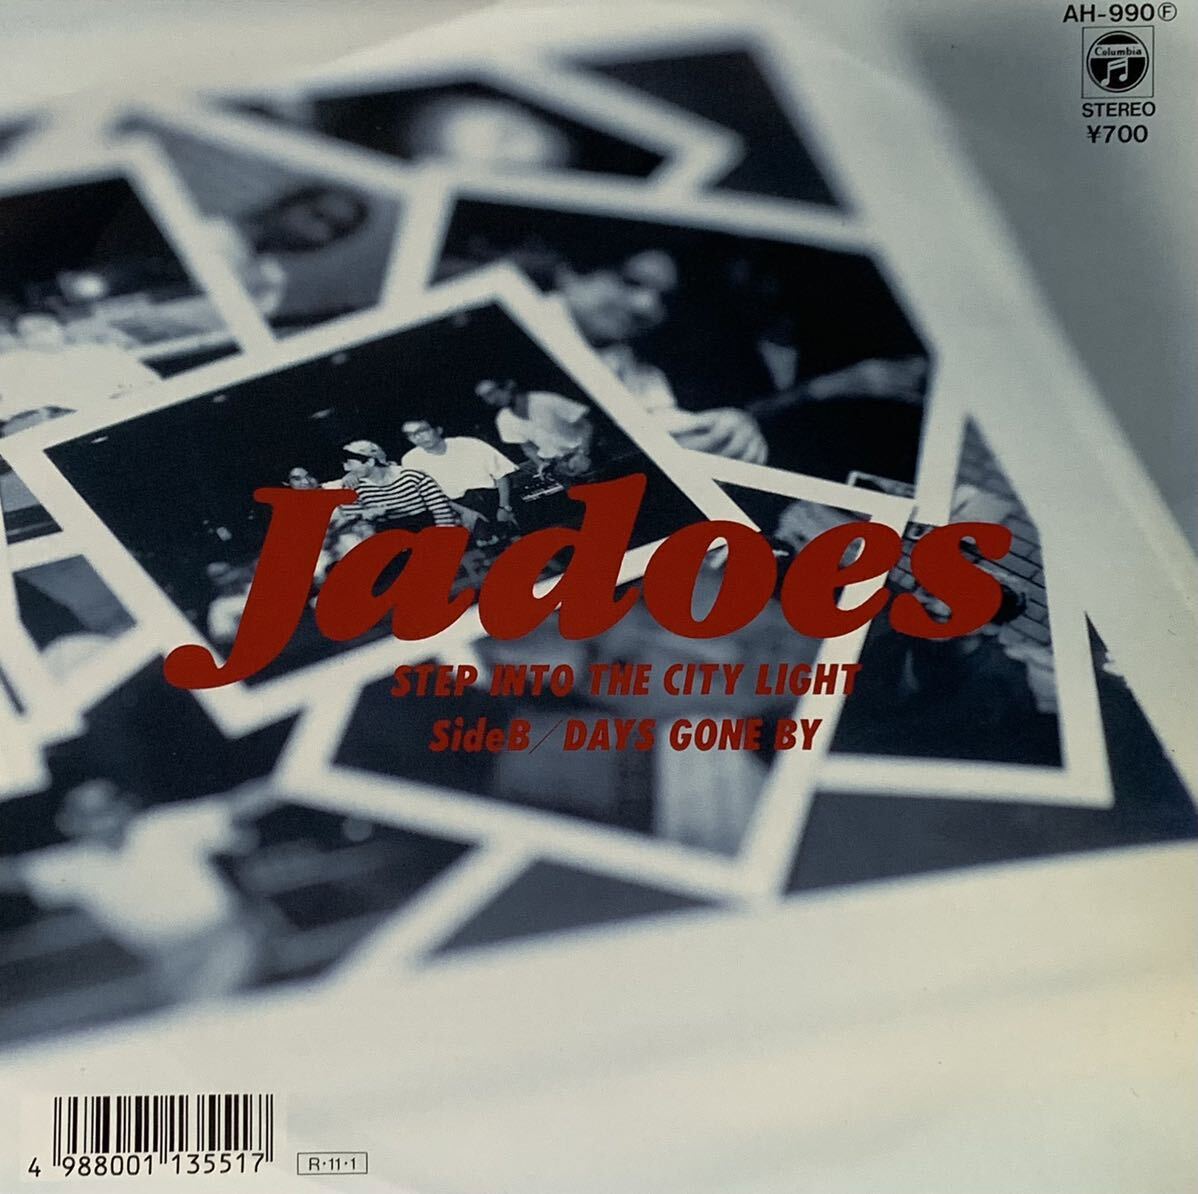 ［EP 7inch］プロモ JADOES / STEP INTO THE CITY LIGHTS（1988）Japanese boogie funk city pop AOR 和モノ AH-990 ジャドーズ_画像1